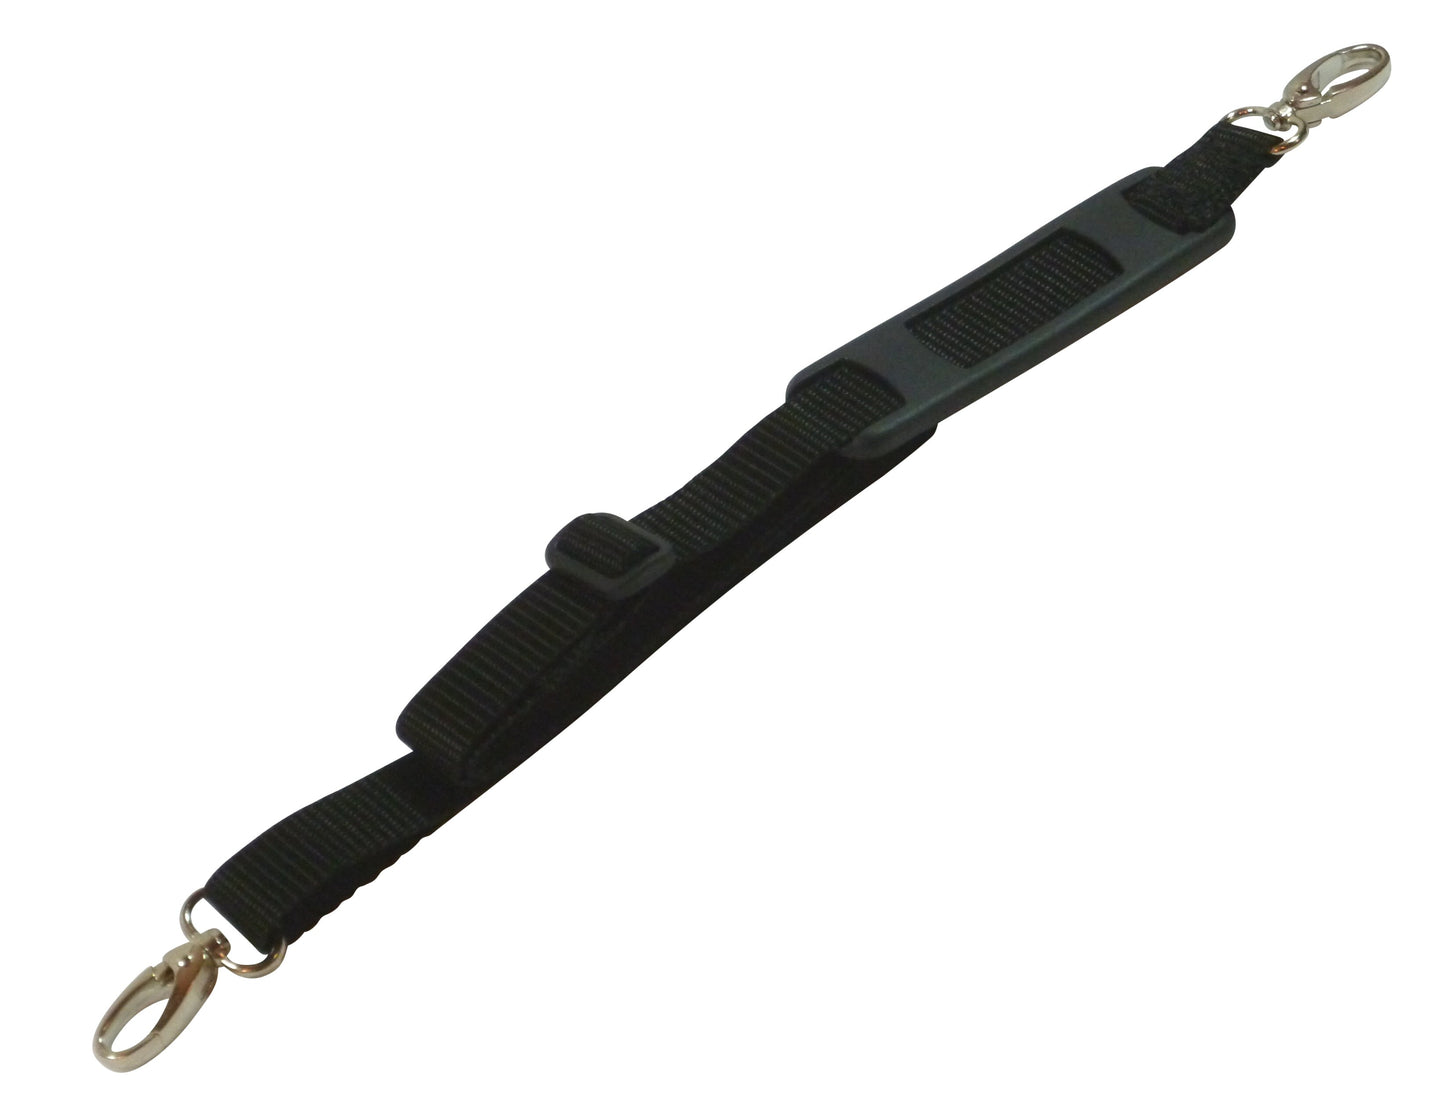 Benristraps 20mm Bag Strap with Metal Buckles and Shoulder Pad, 1 Metre in black